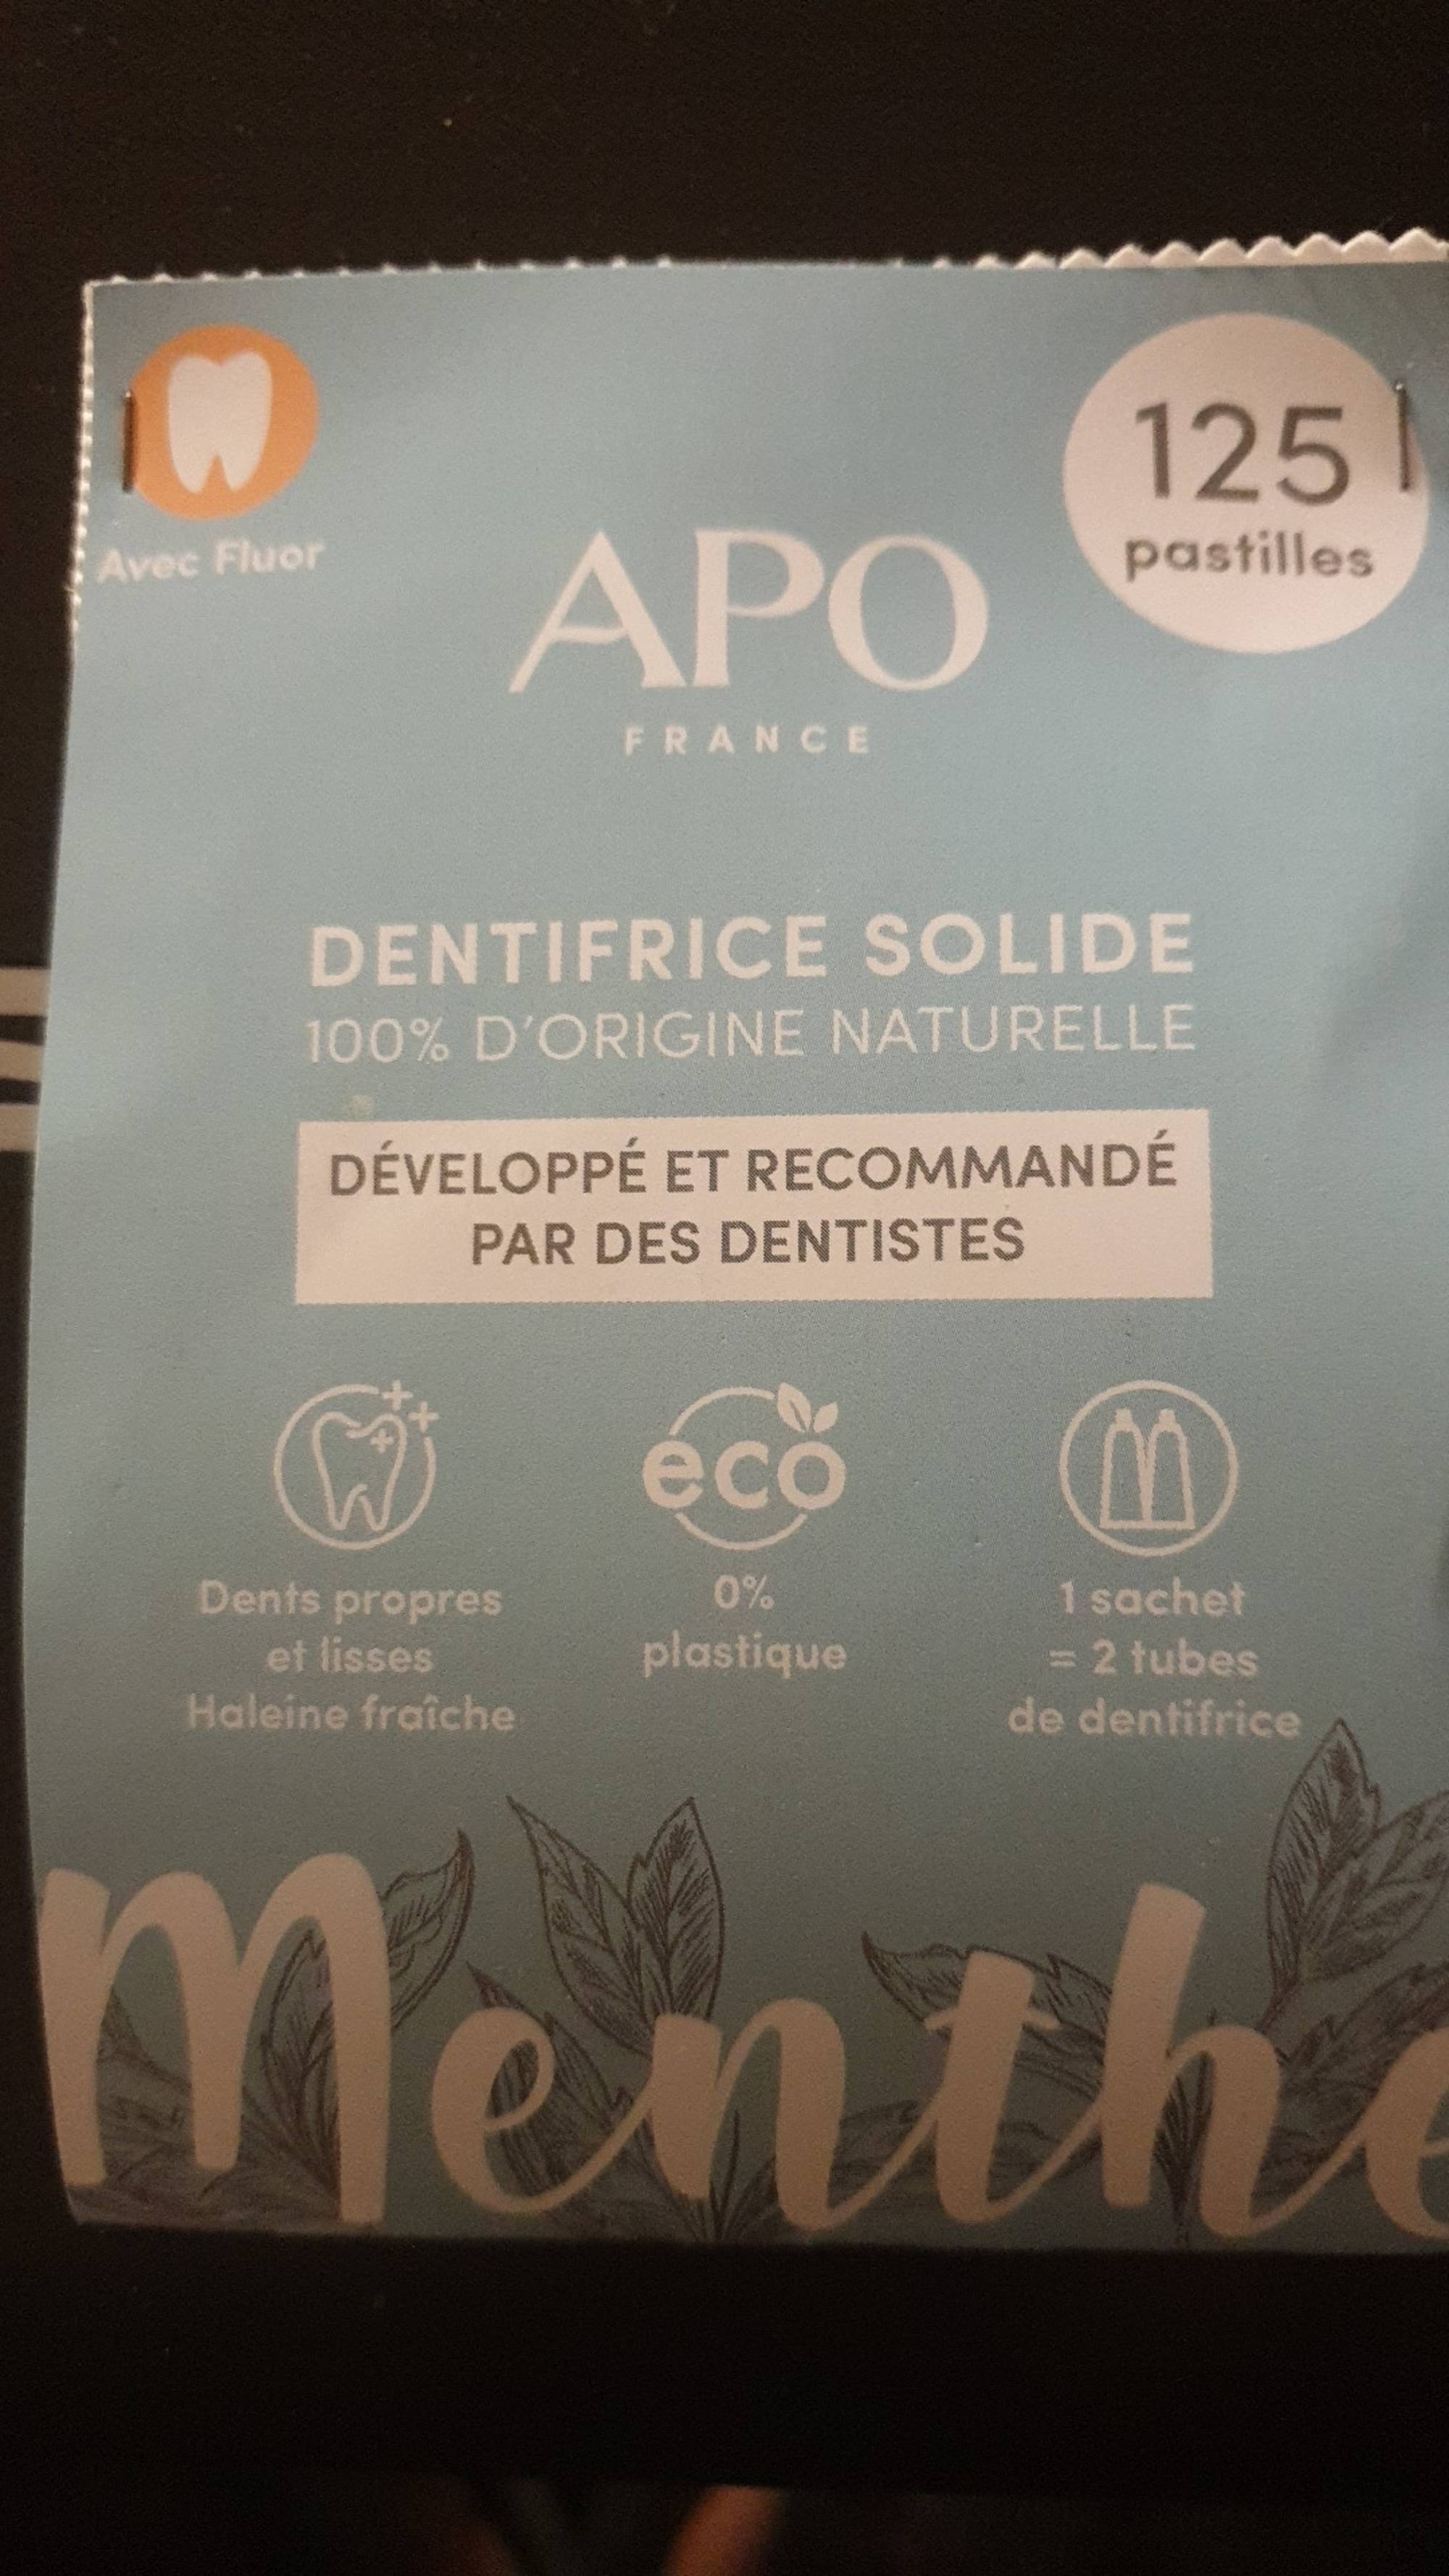 APO FRANCE - Dentifrice solide